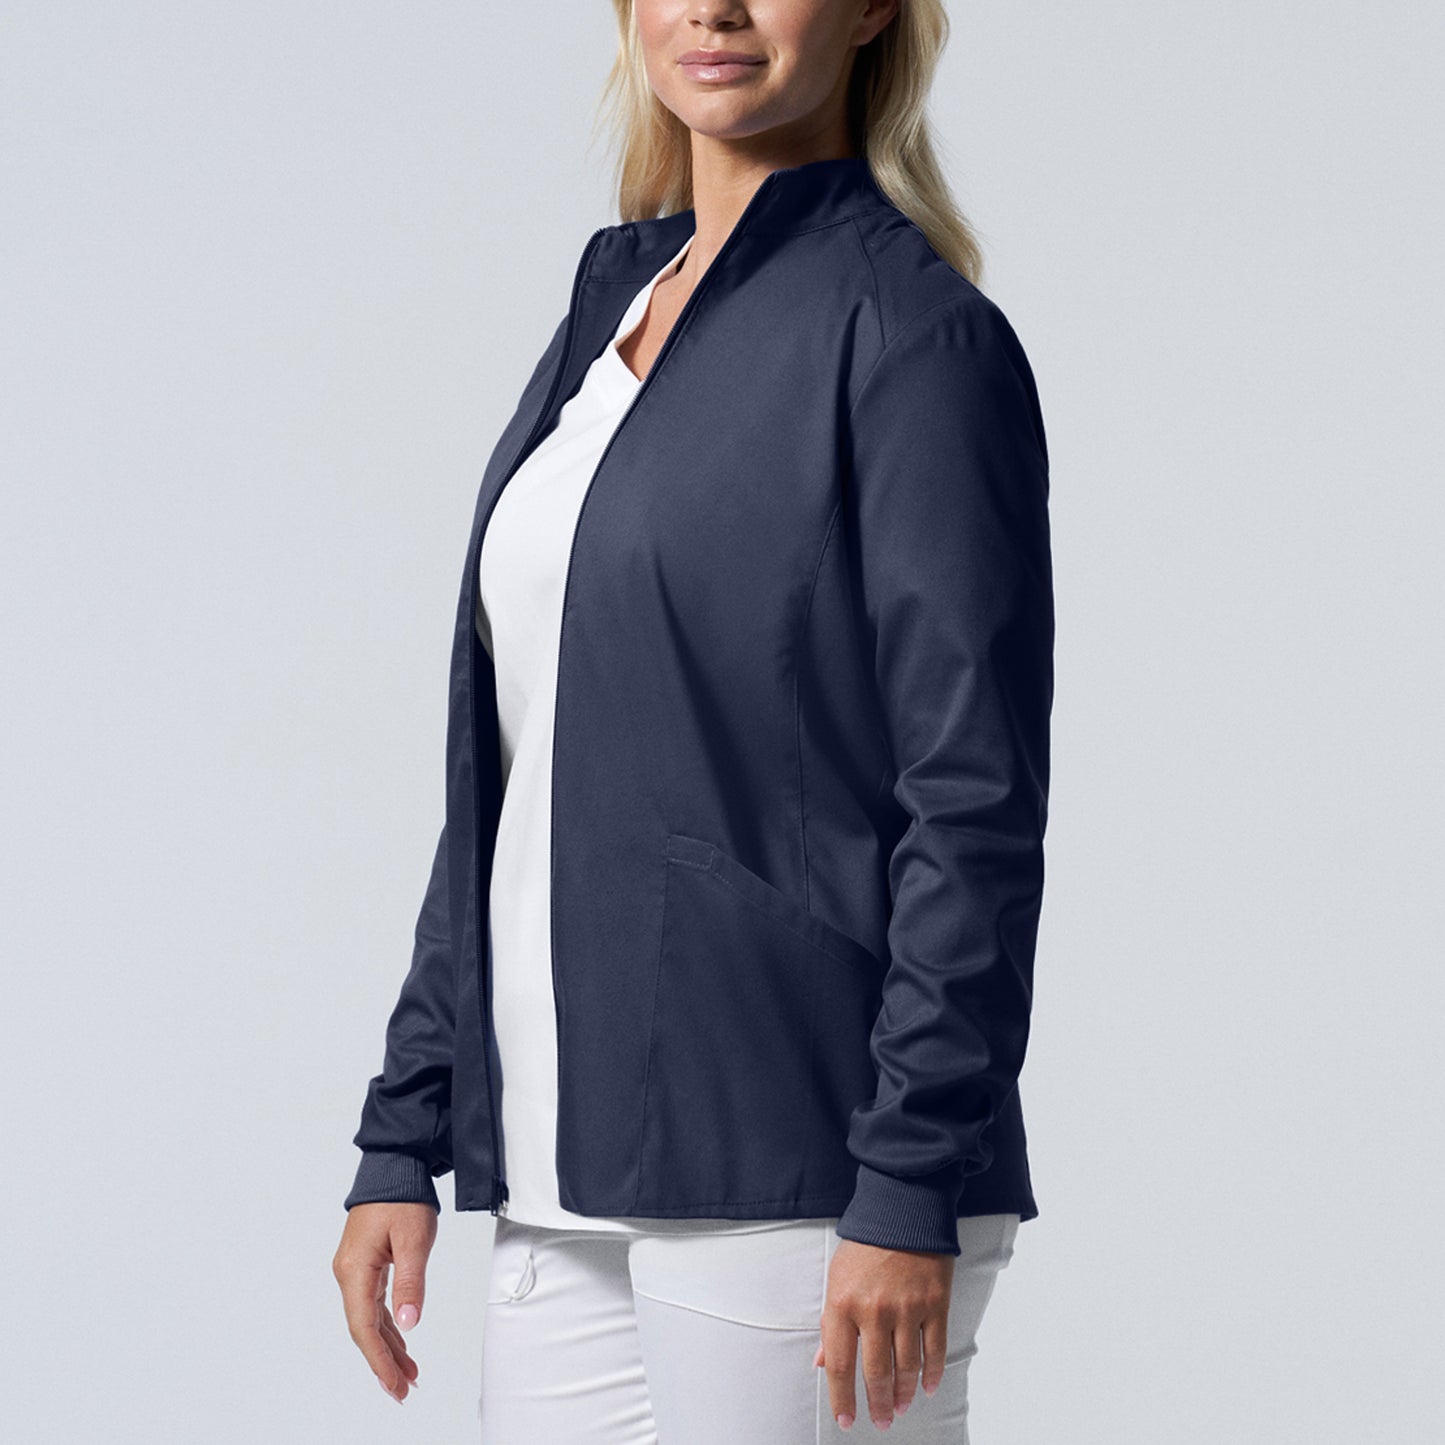 Women's jacket - PROFLEX - LJ 701